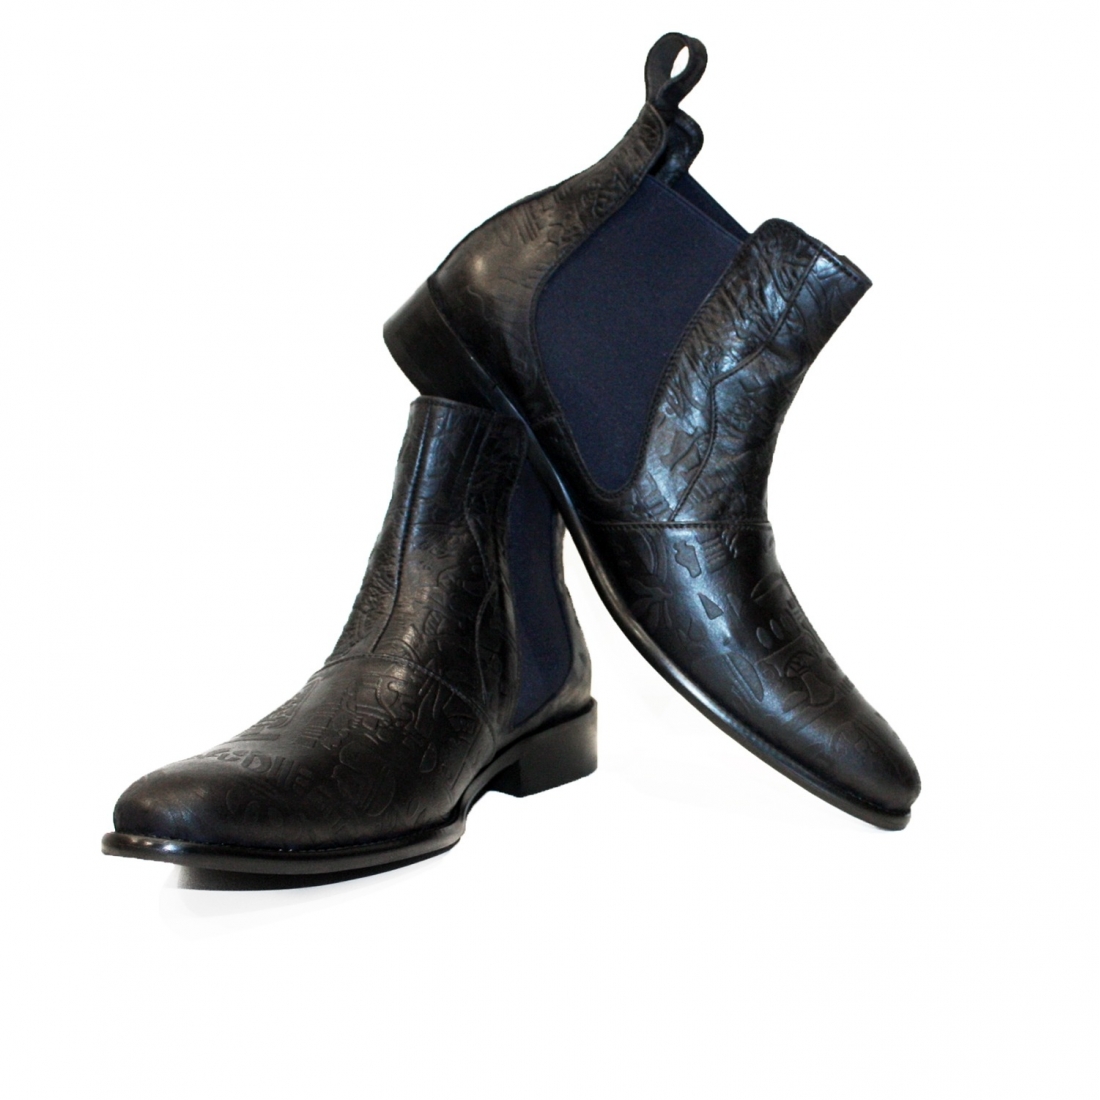 Modello Turtello - チェルシーブーツ - Handmade Colorful Italian Leather Shoes